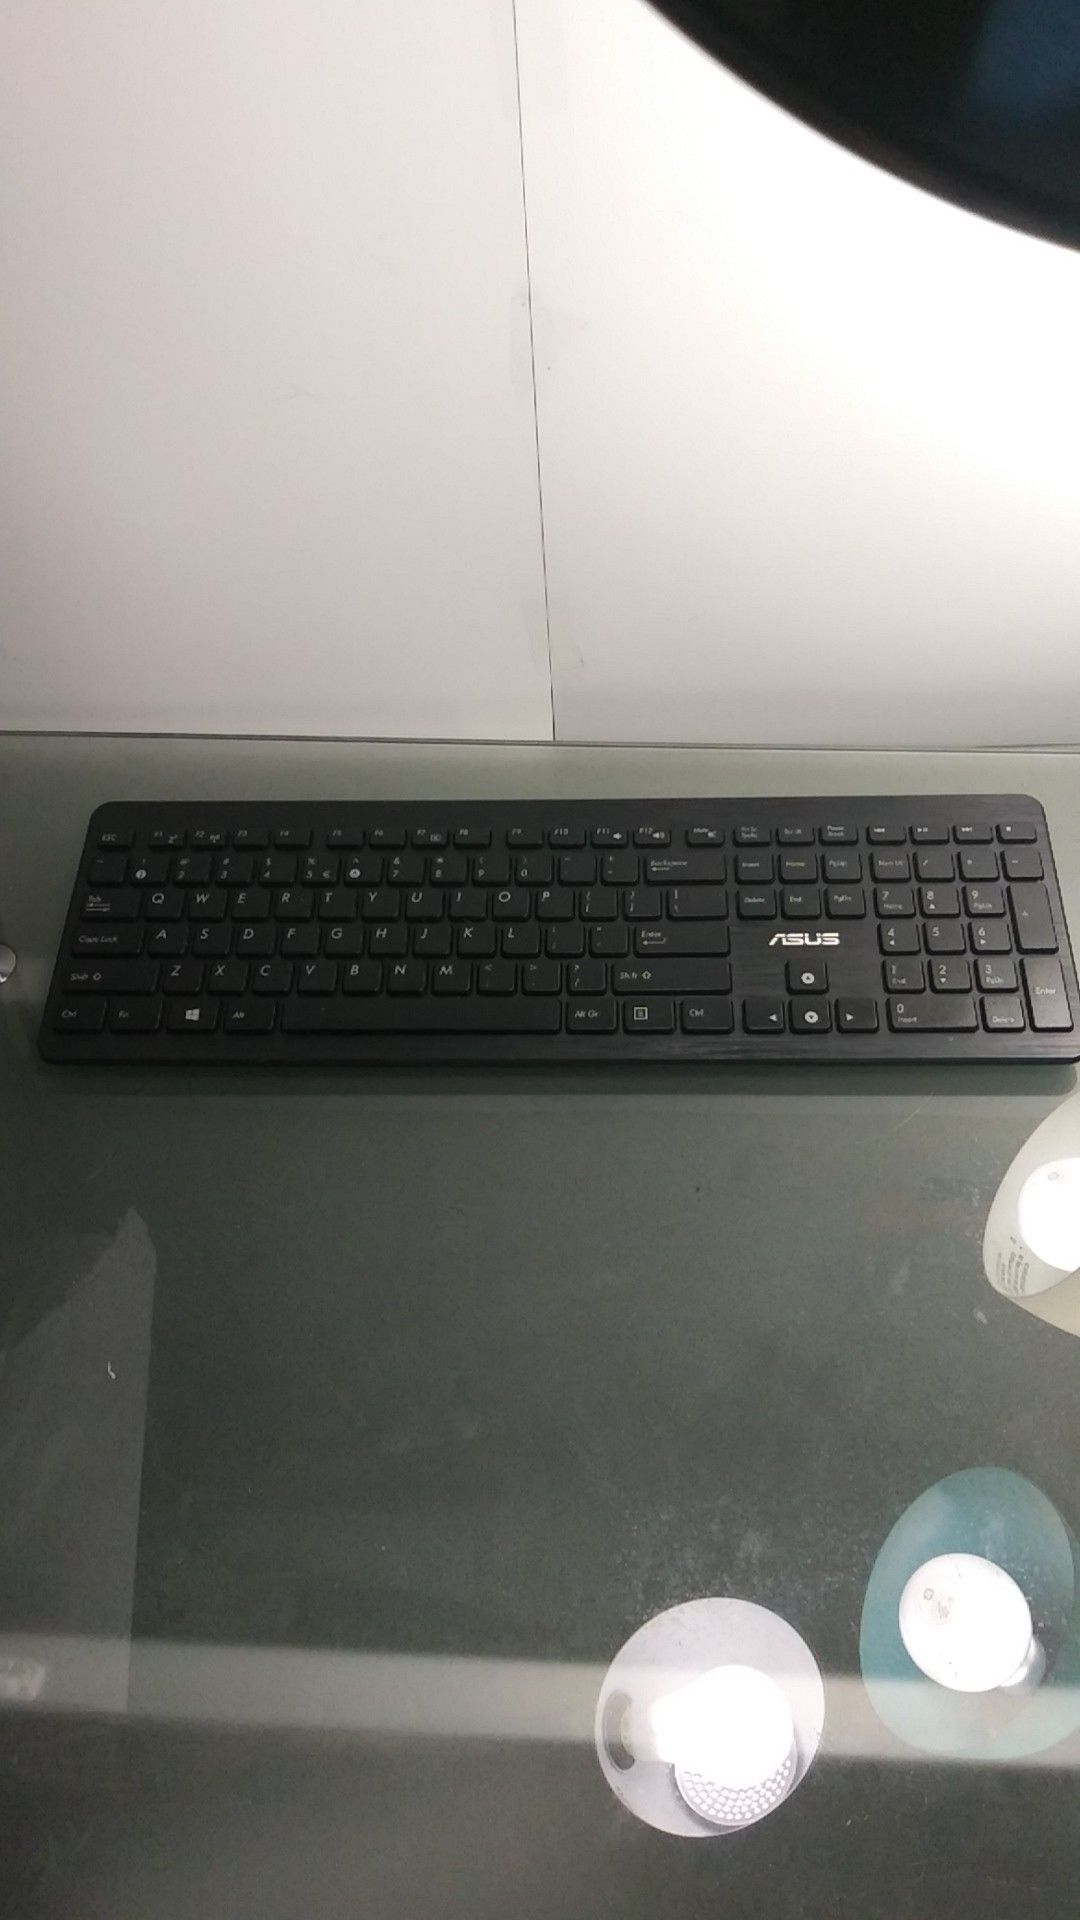 Asus wireless computer keyboard